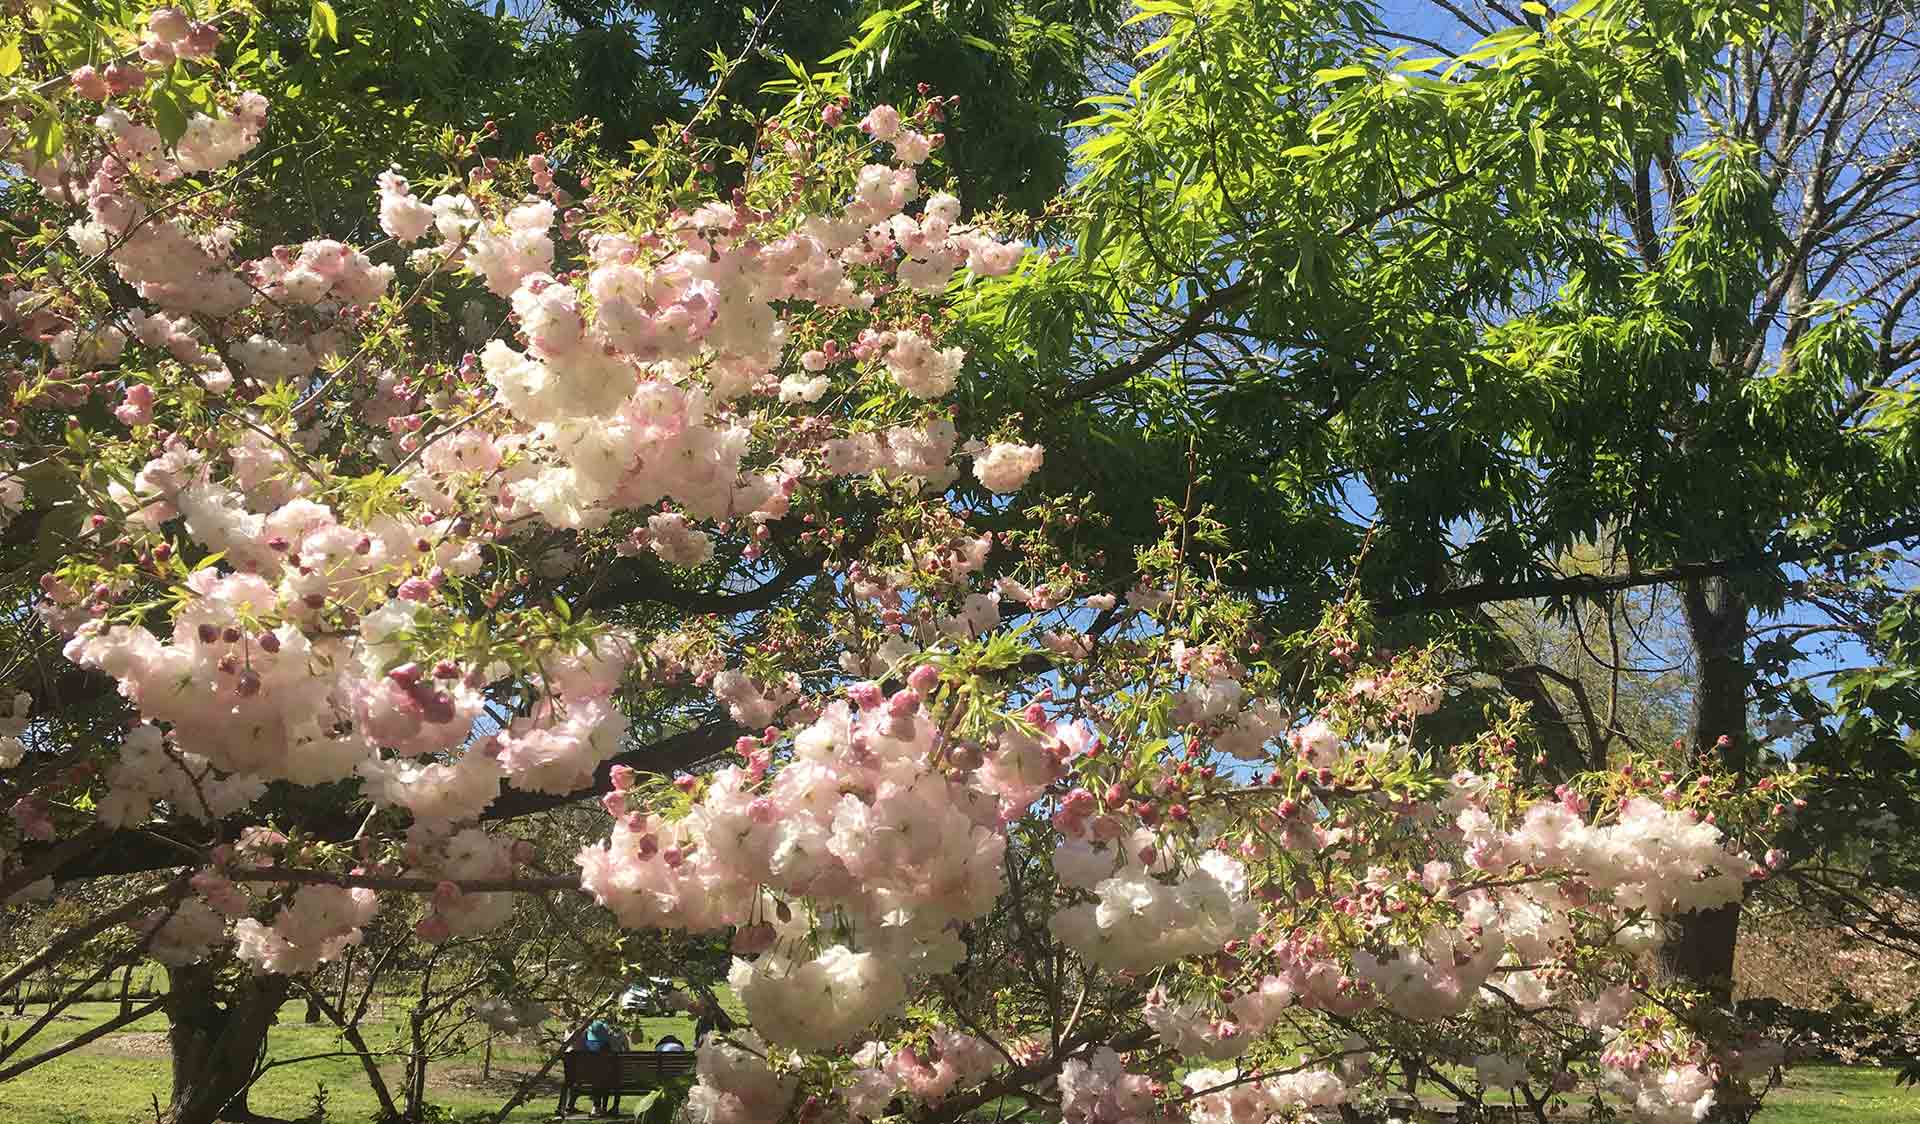 Banksia Park cherry blossoms in full bloom